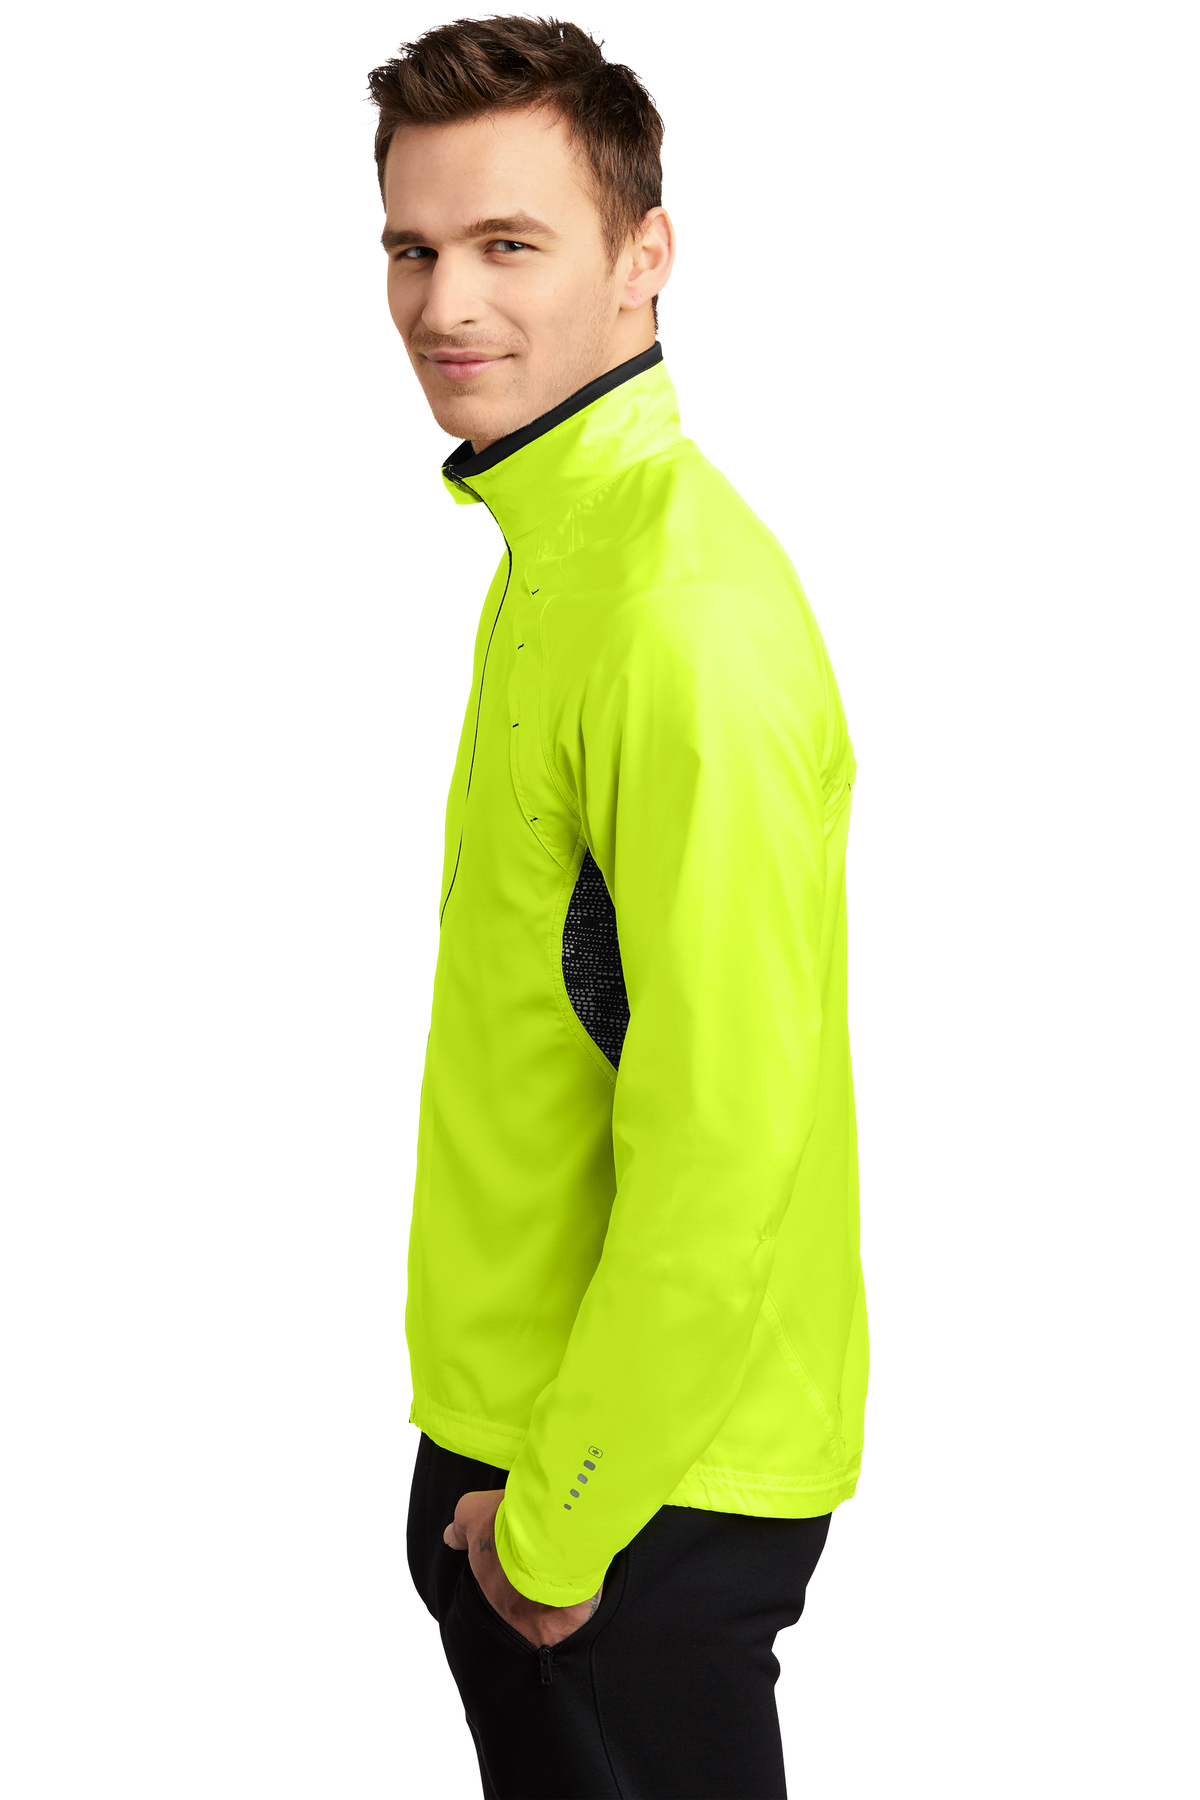 OGIO ® Trainer Jacket | Product | SanMar